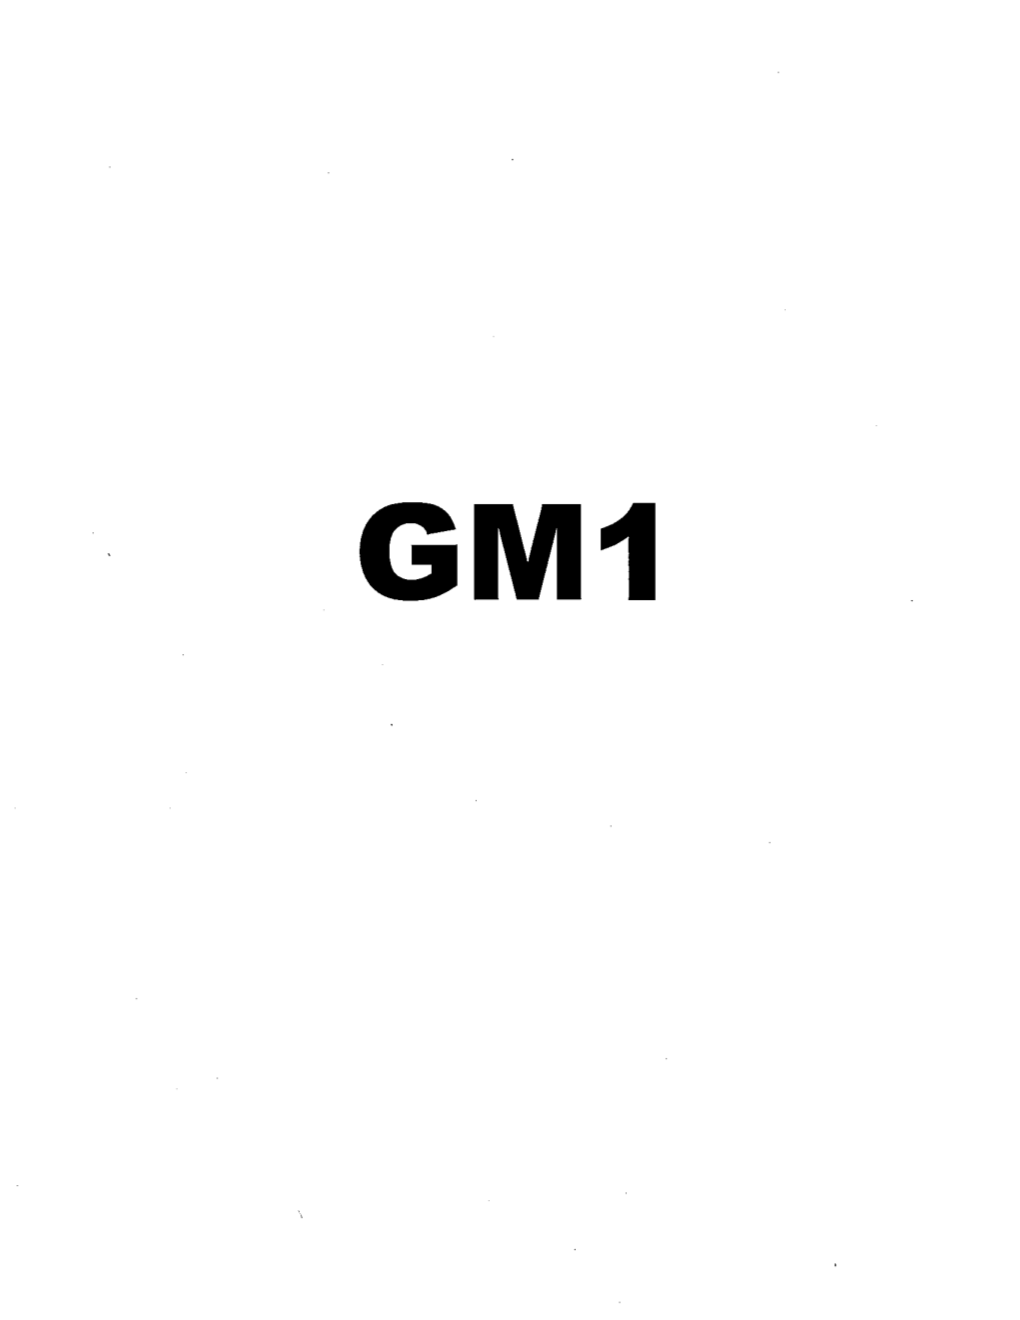 GM1 Testimony